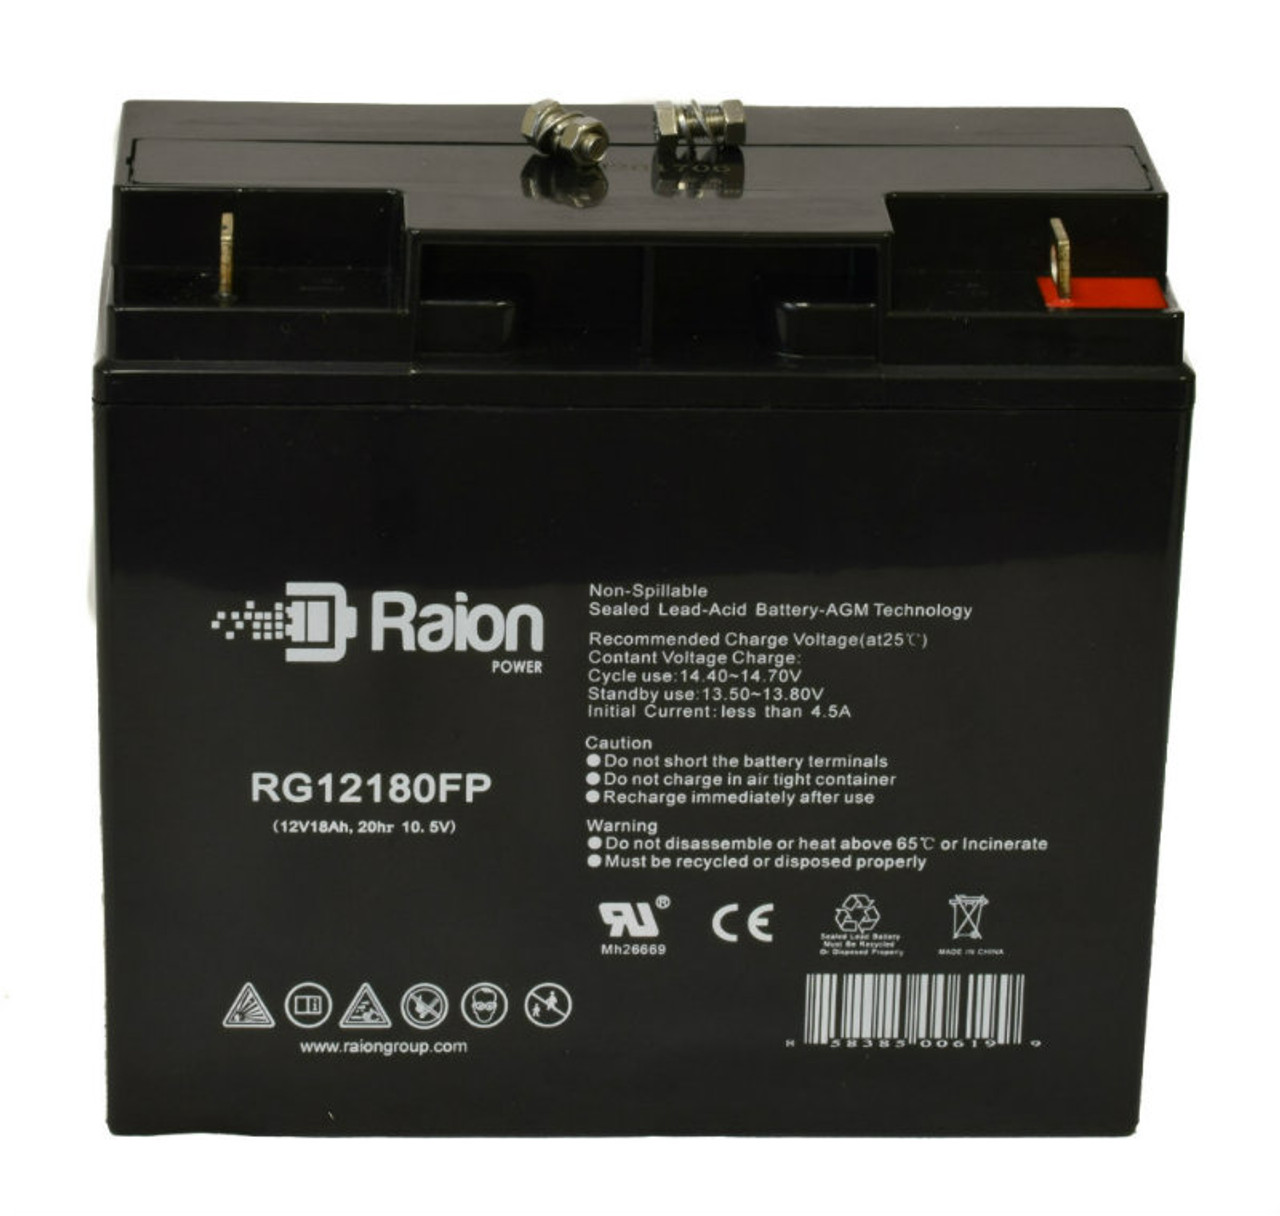 Raion Power RG12180FP 12V 18Ah Lead Acid Battery for Leader CT17-12